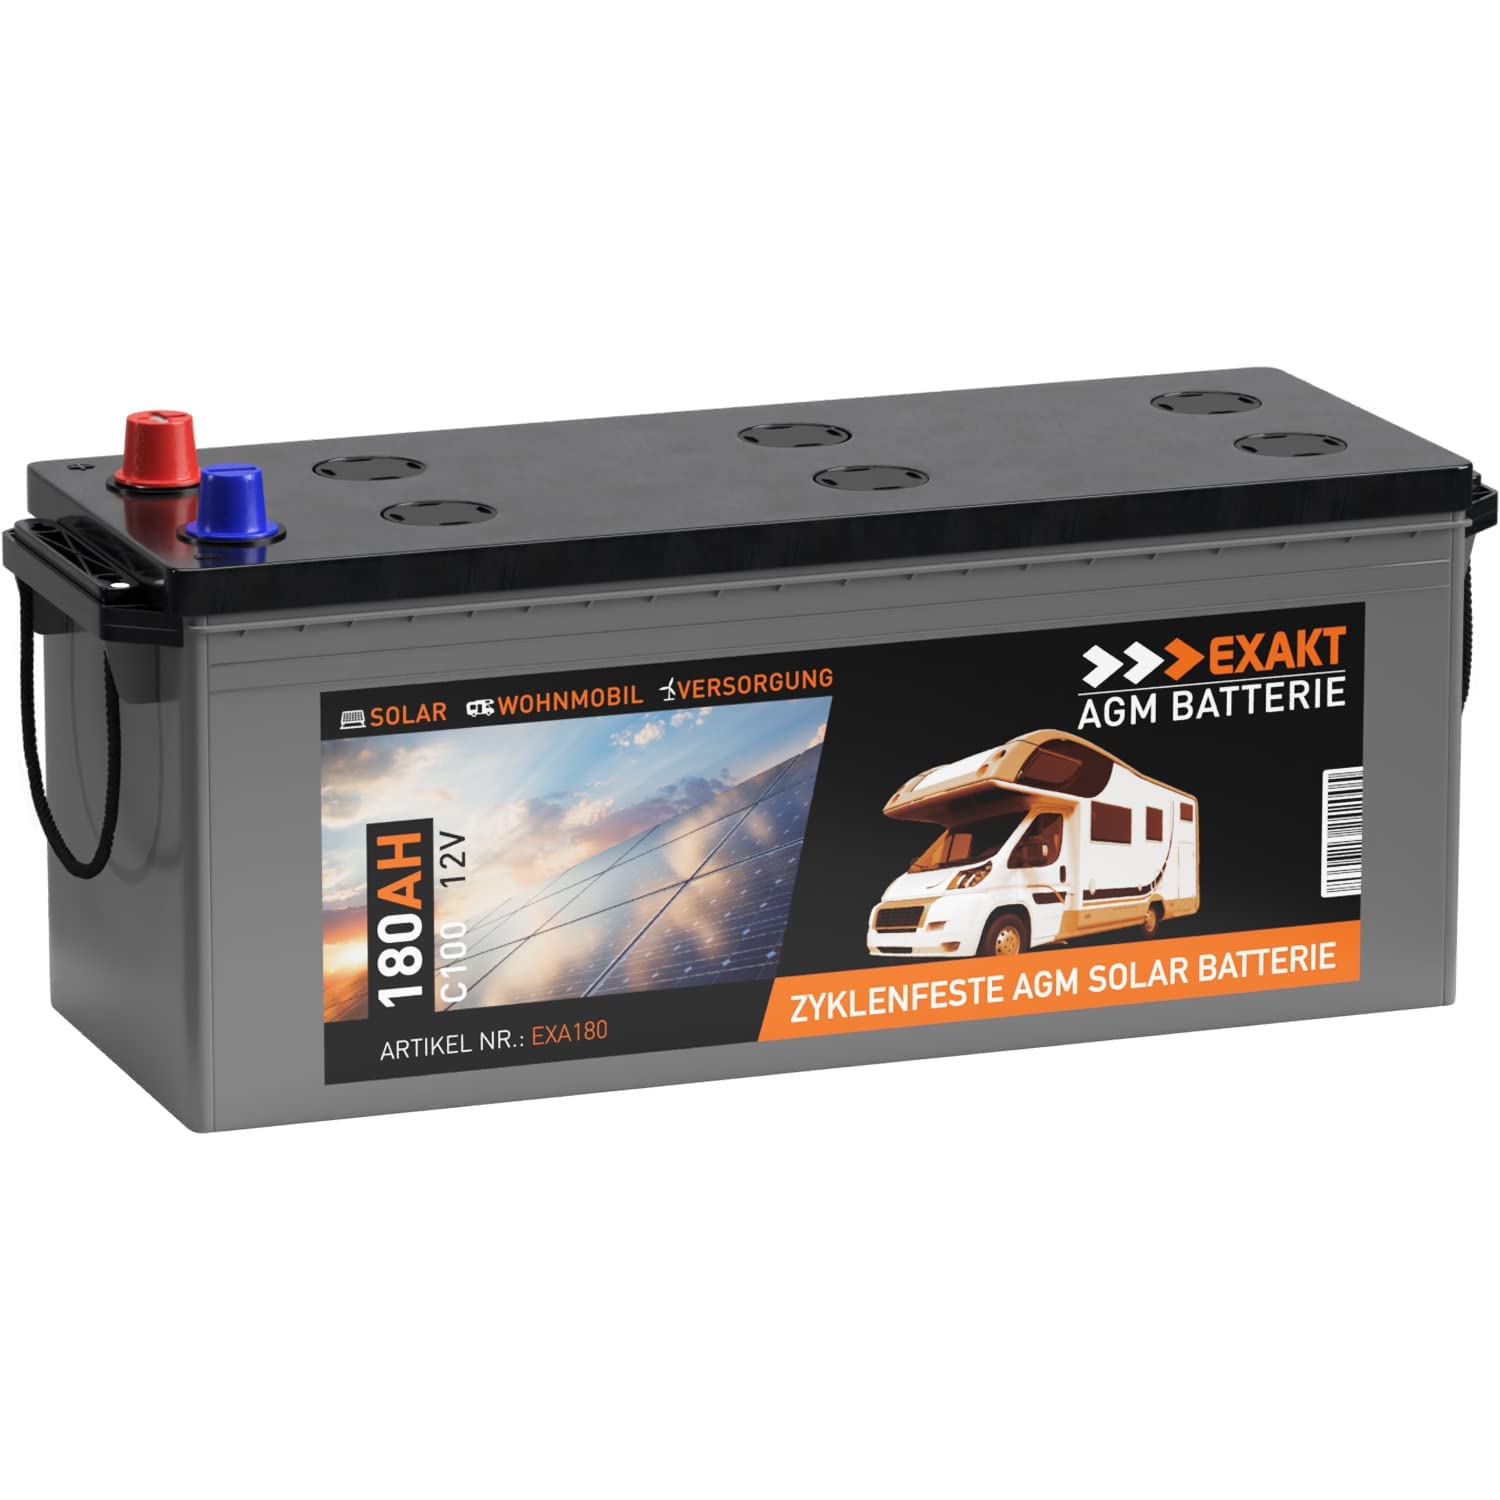 EXAKT AGM Batterie 180Ah 12V C100 statt 170Ah 160Ah Solarbatterie Wohnmobil Batterie Solar Boot Camping Versorgung Verbraucherbatterie von Exakt